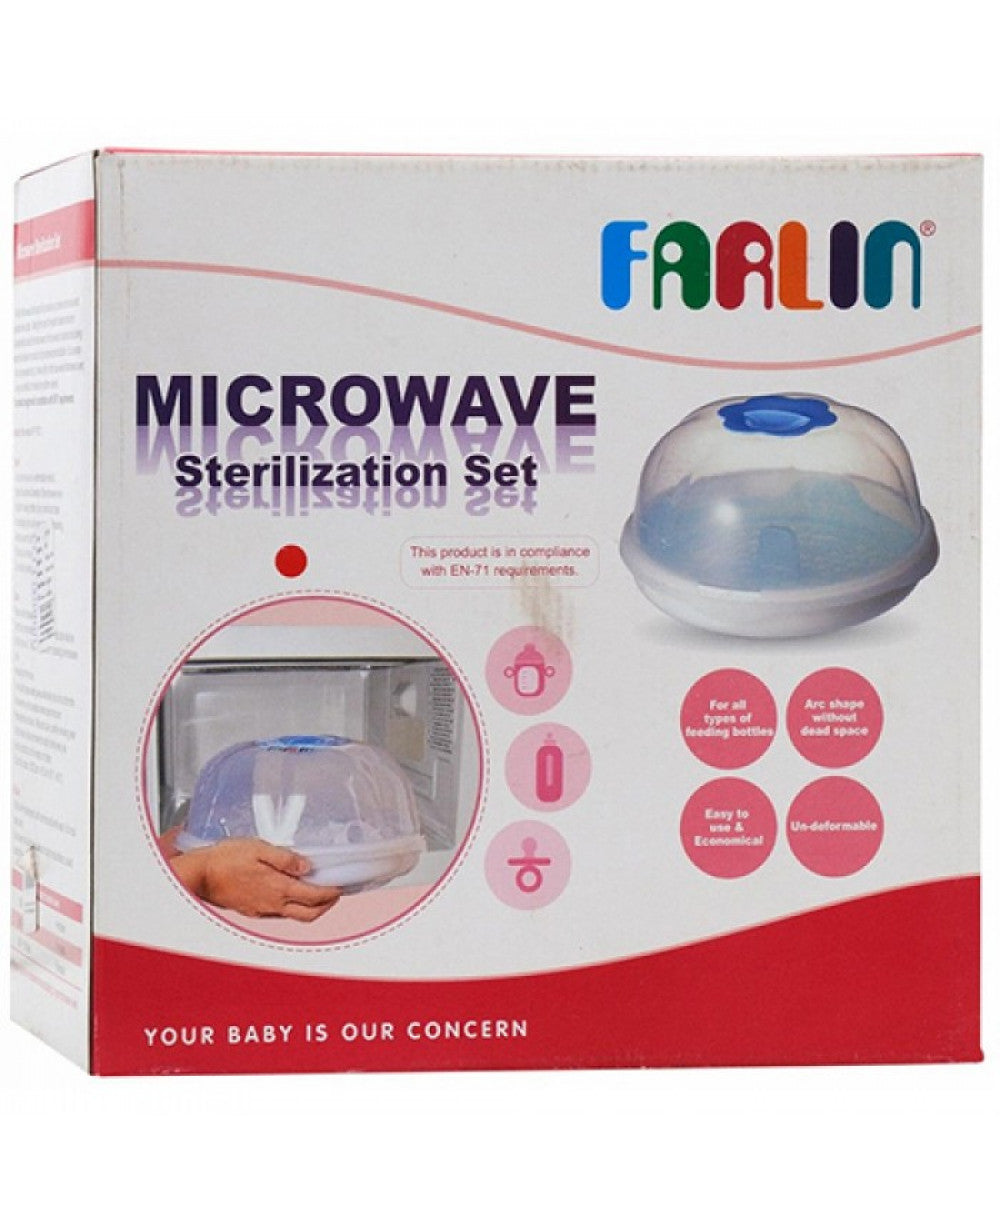 Farlin Microwave Sterilization Set